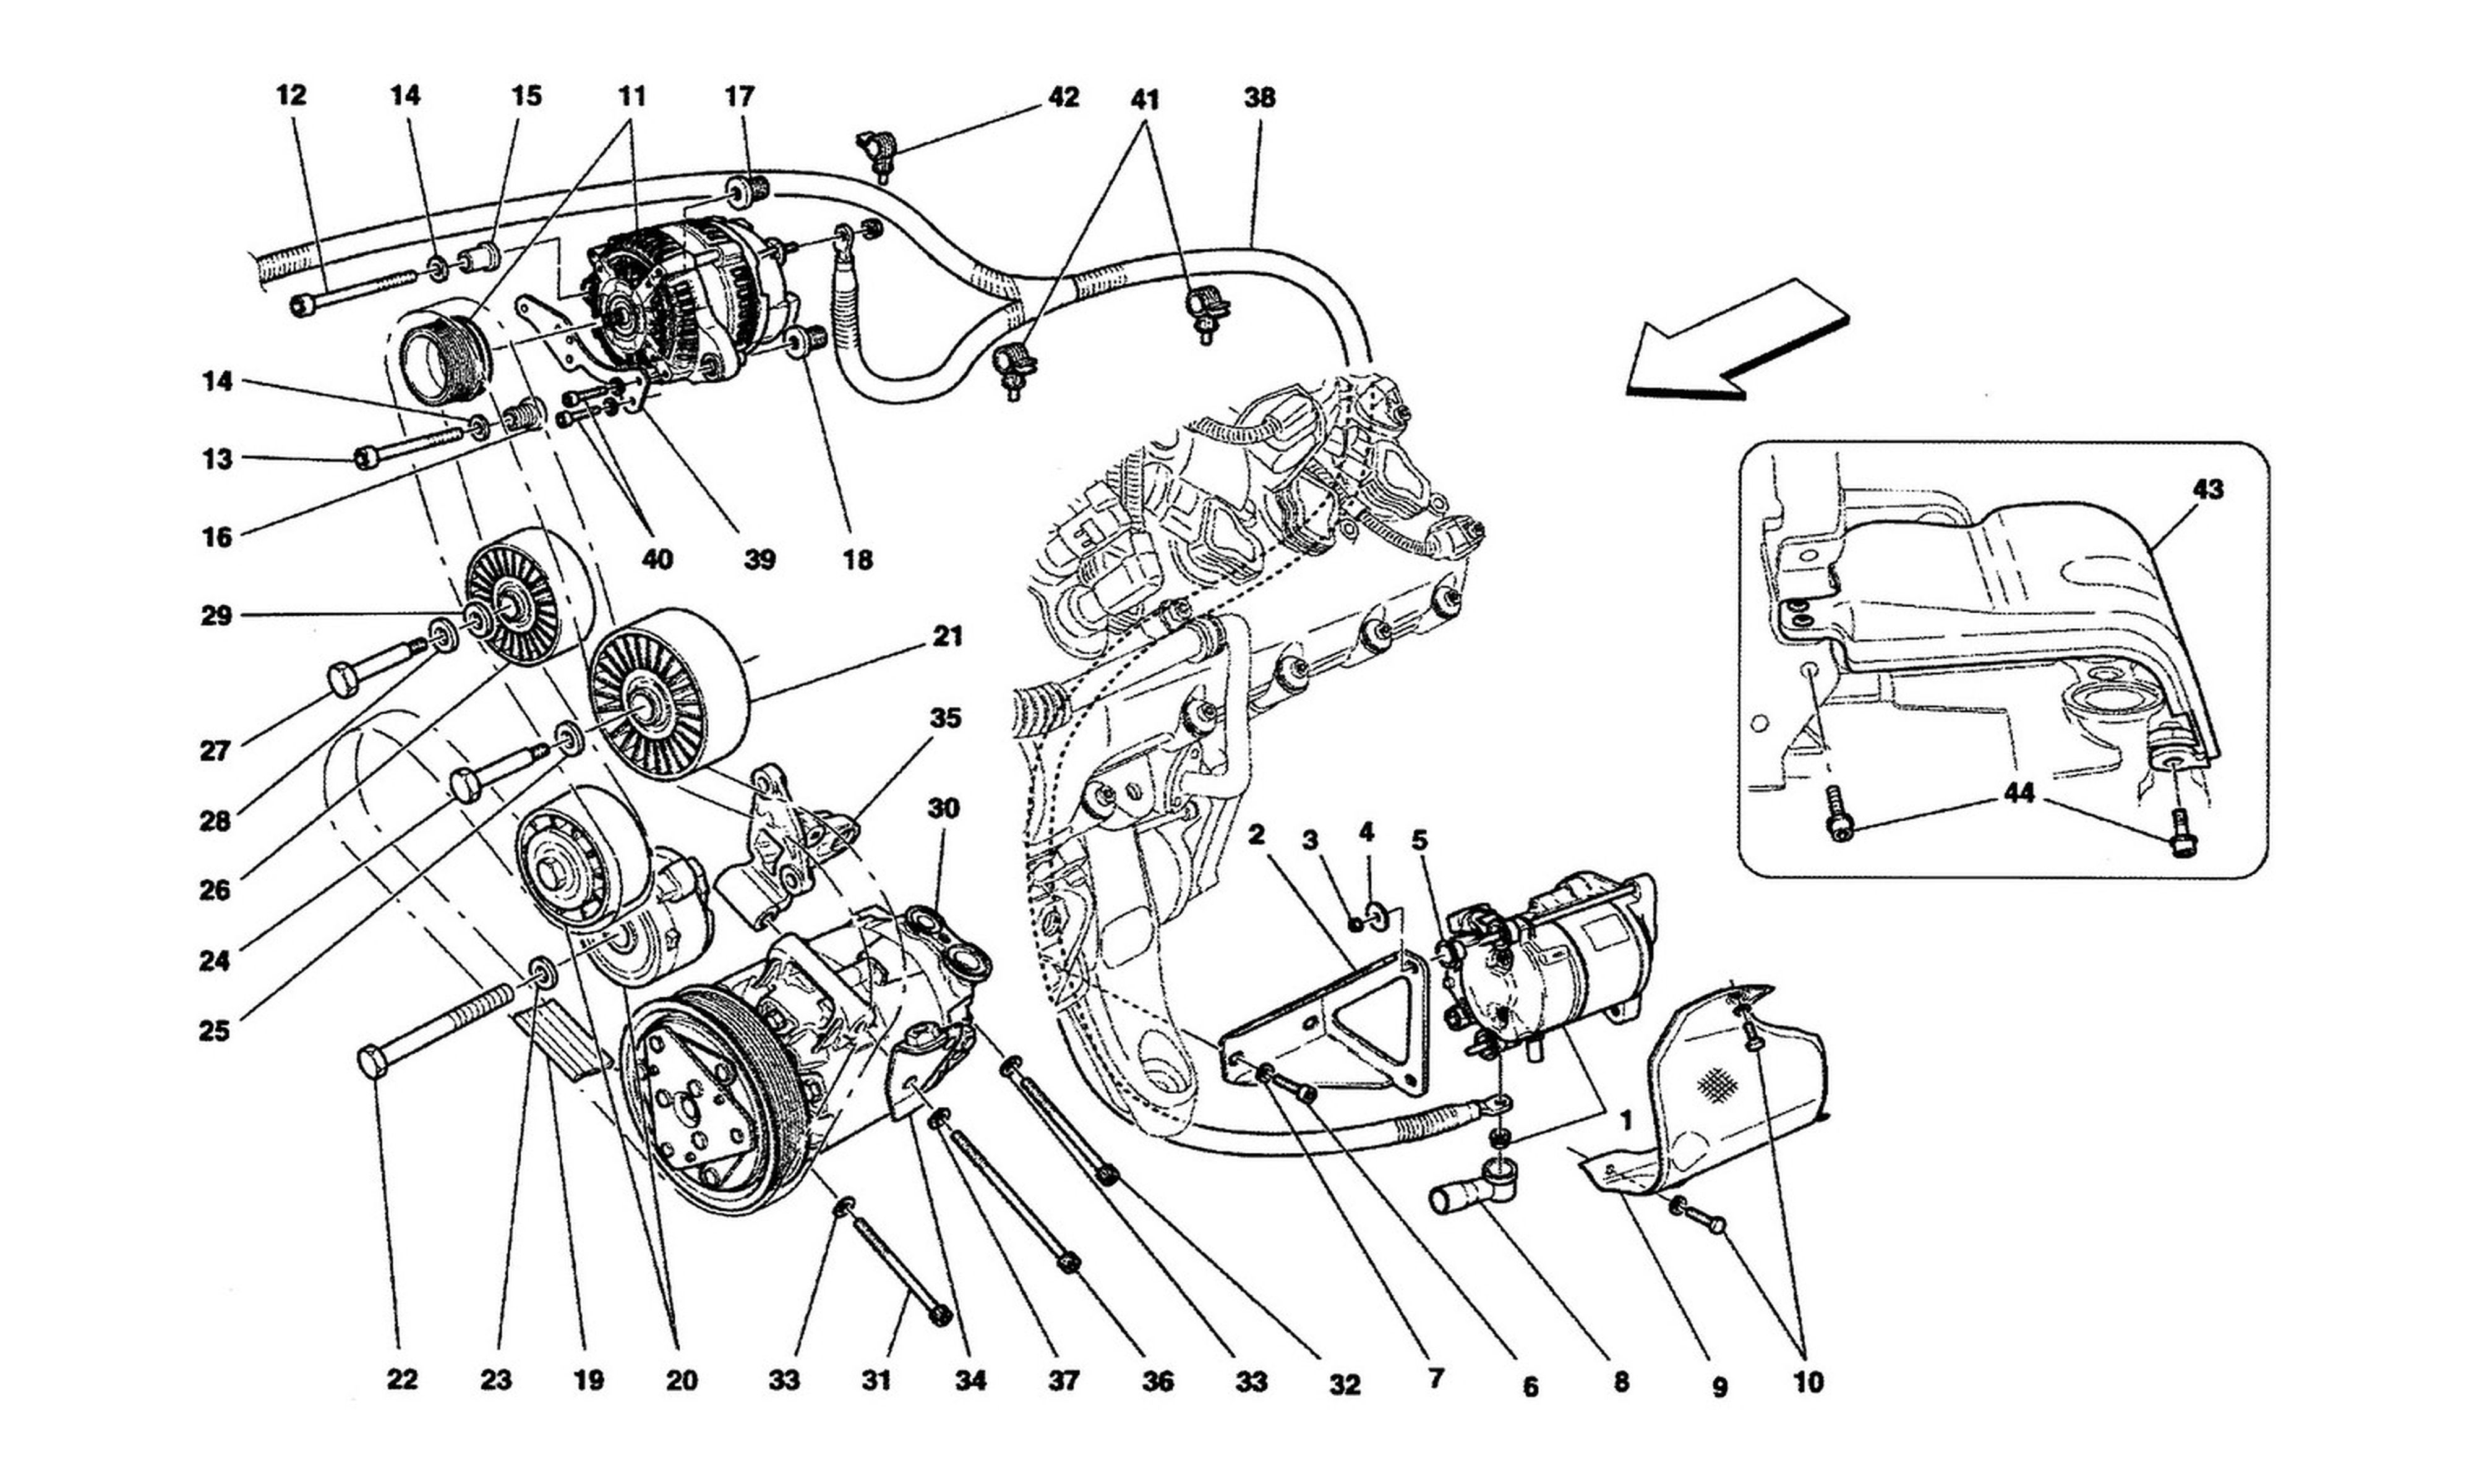 Schematic: Alternator Starting Motor And A.C. Compressor